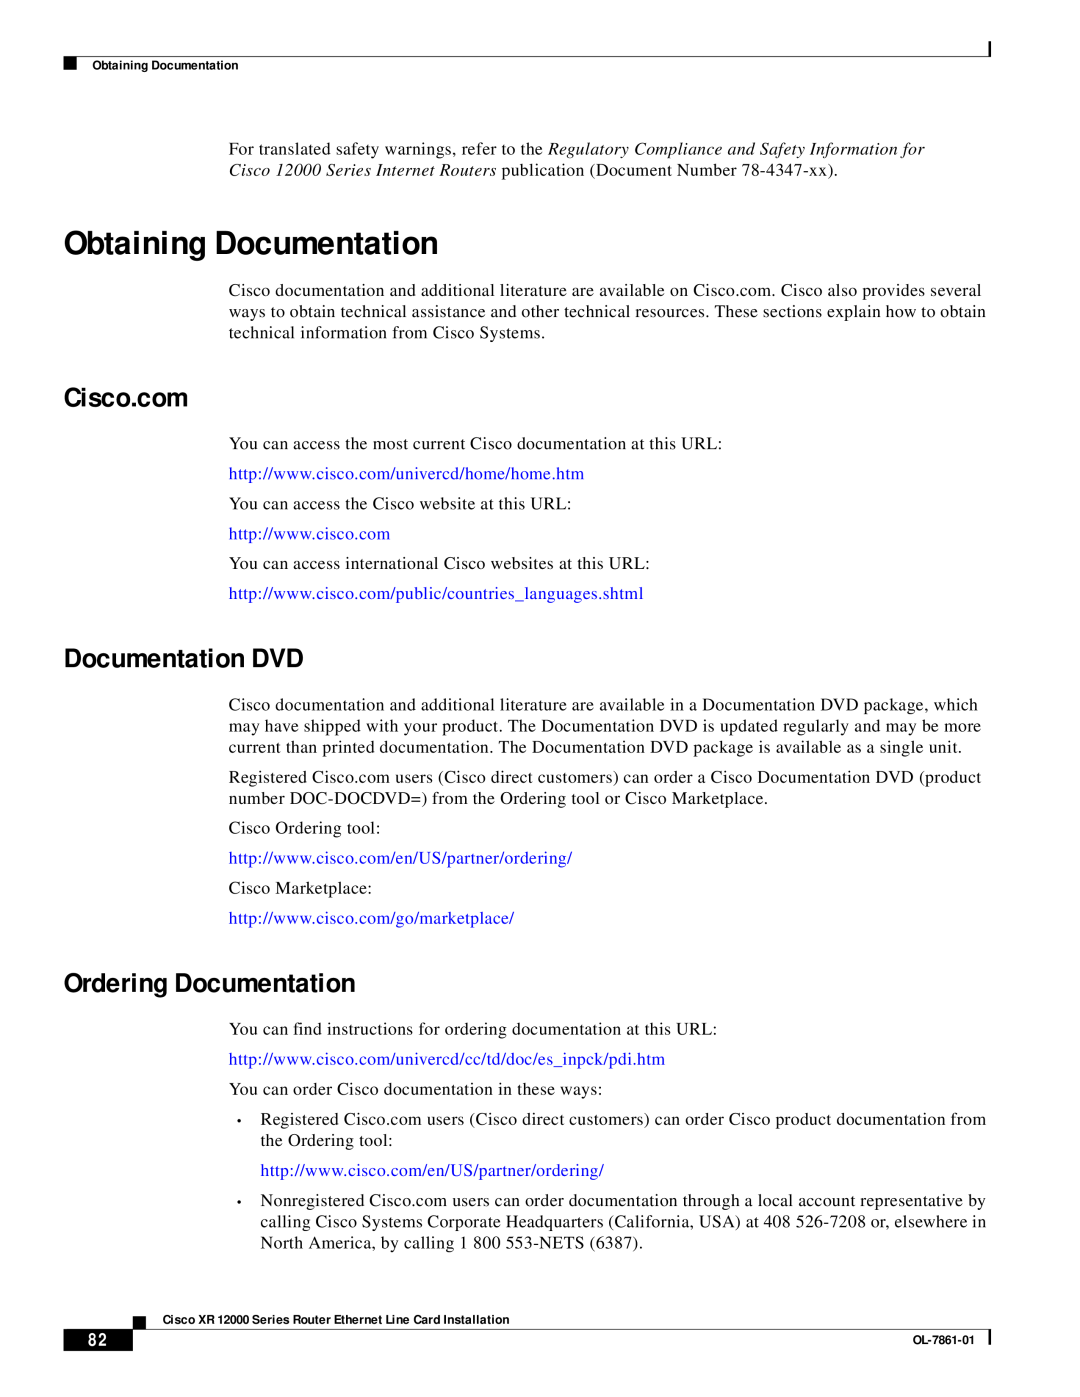 Cisco Systems OL-7861-01 manual Obtaining Documentation, Cisco.com, Documentation DVD, Ordering Documentation 